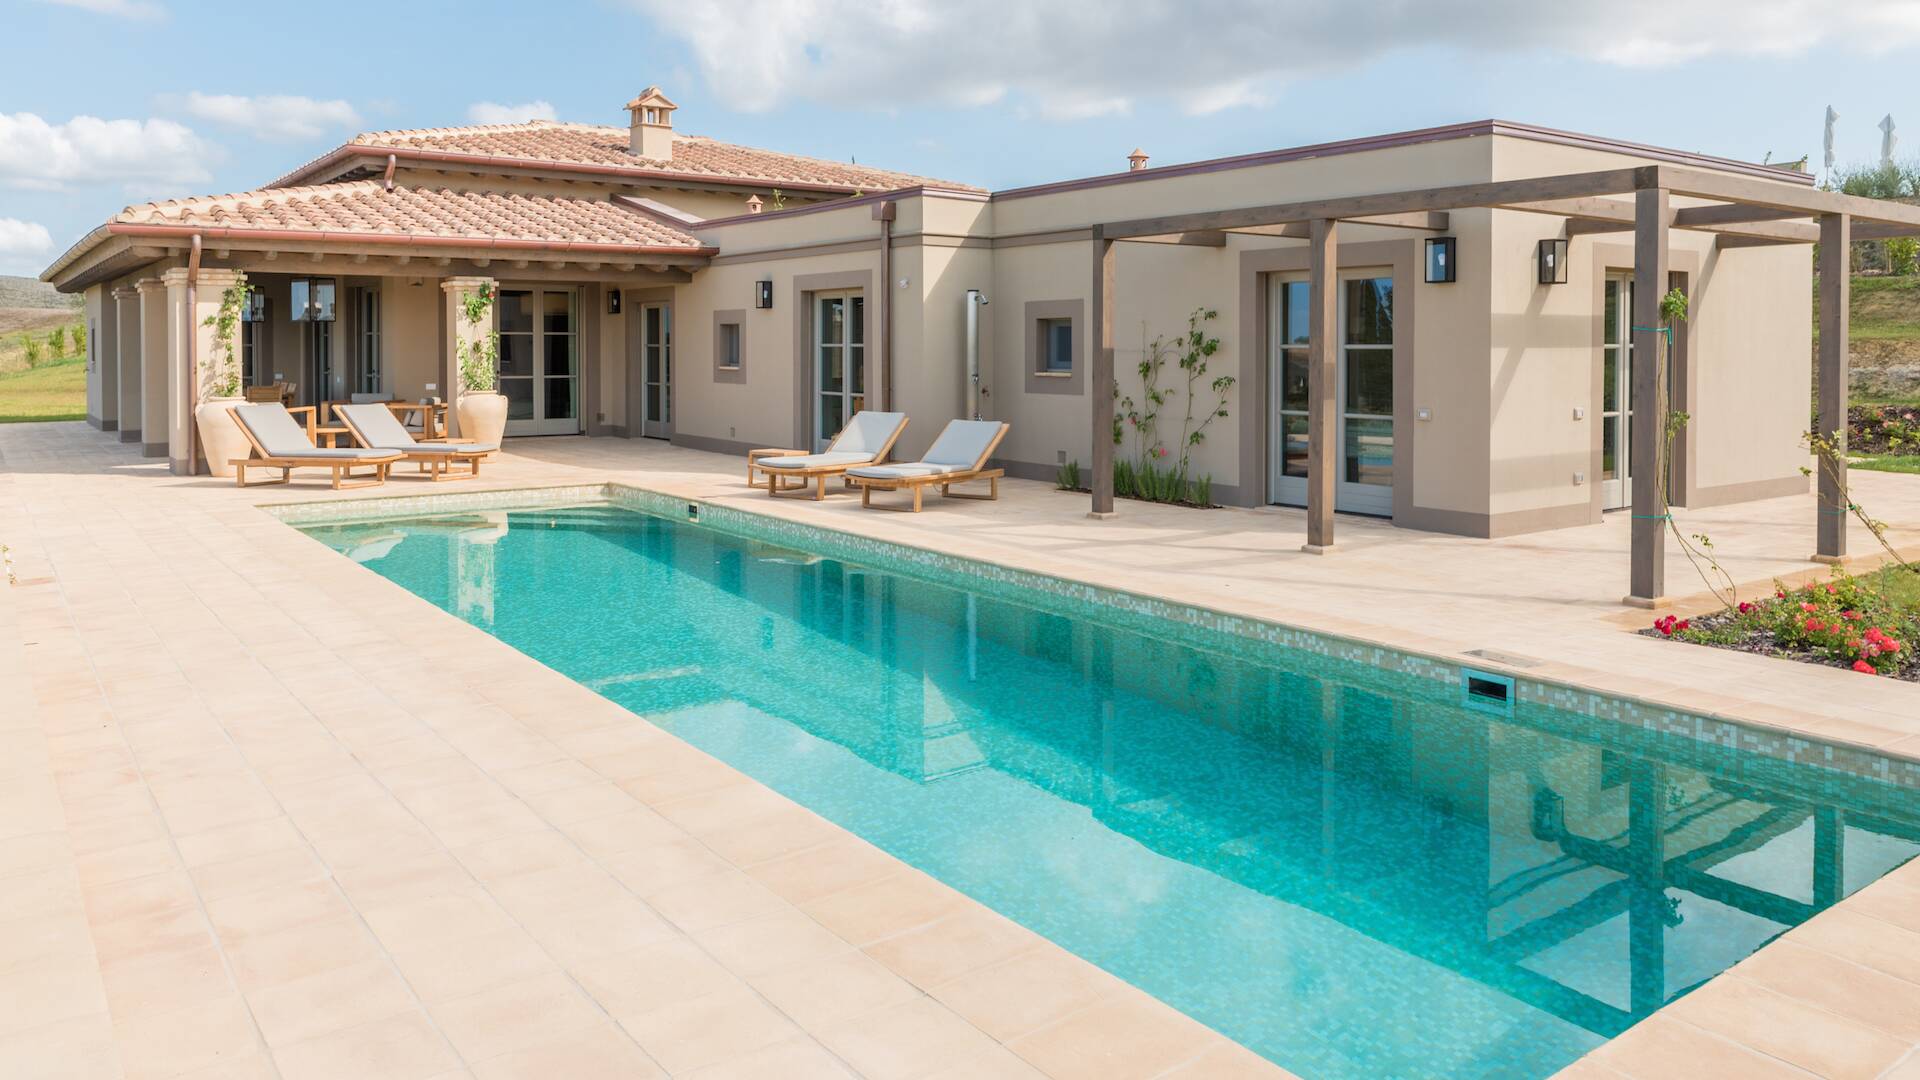 Villa Elfi and its private swimming pool